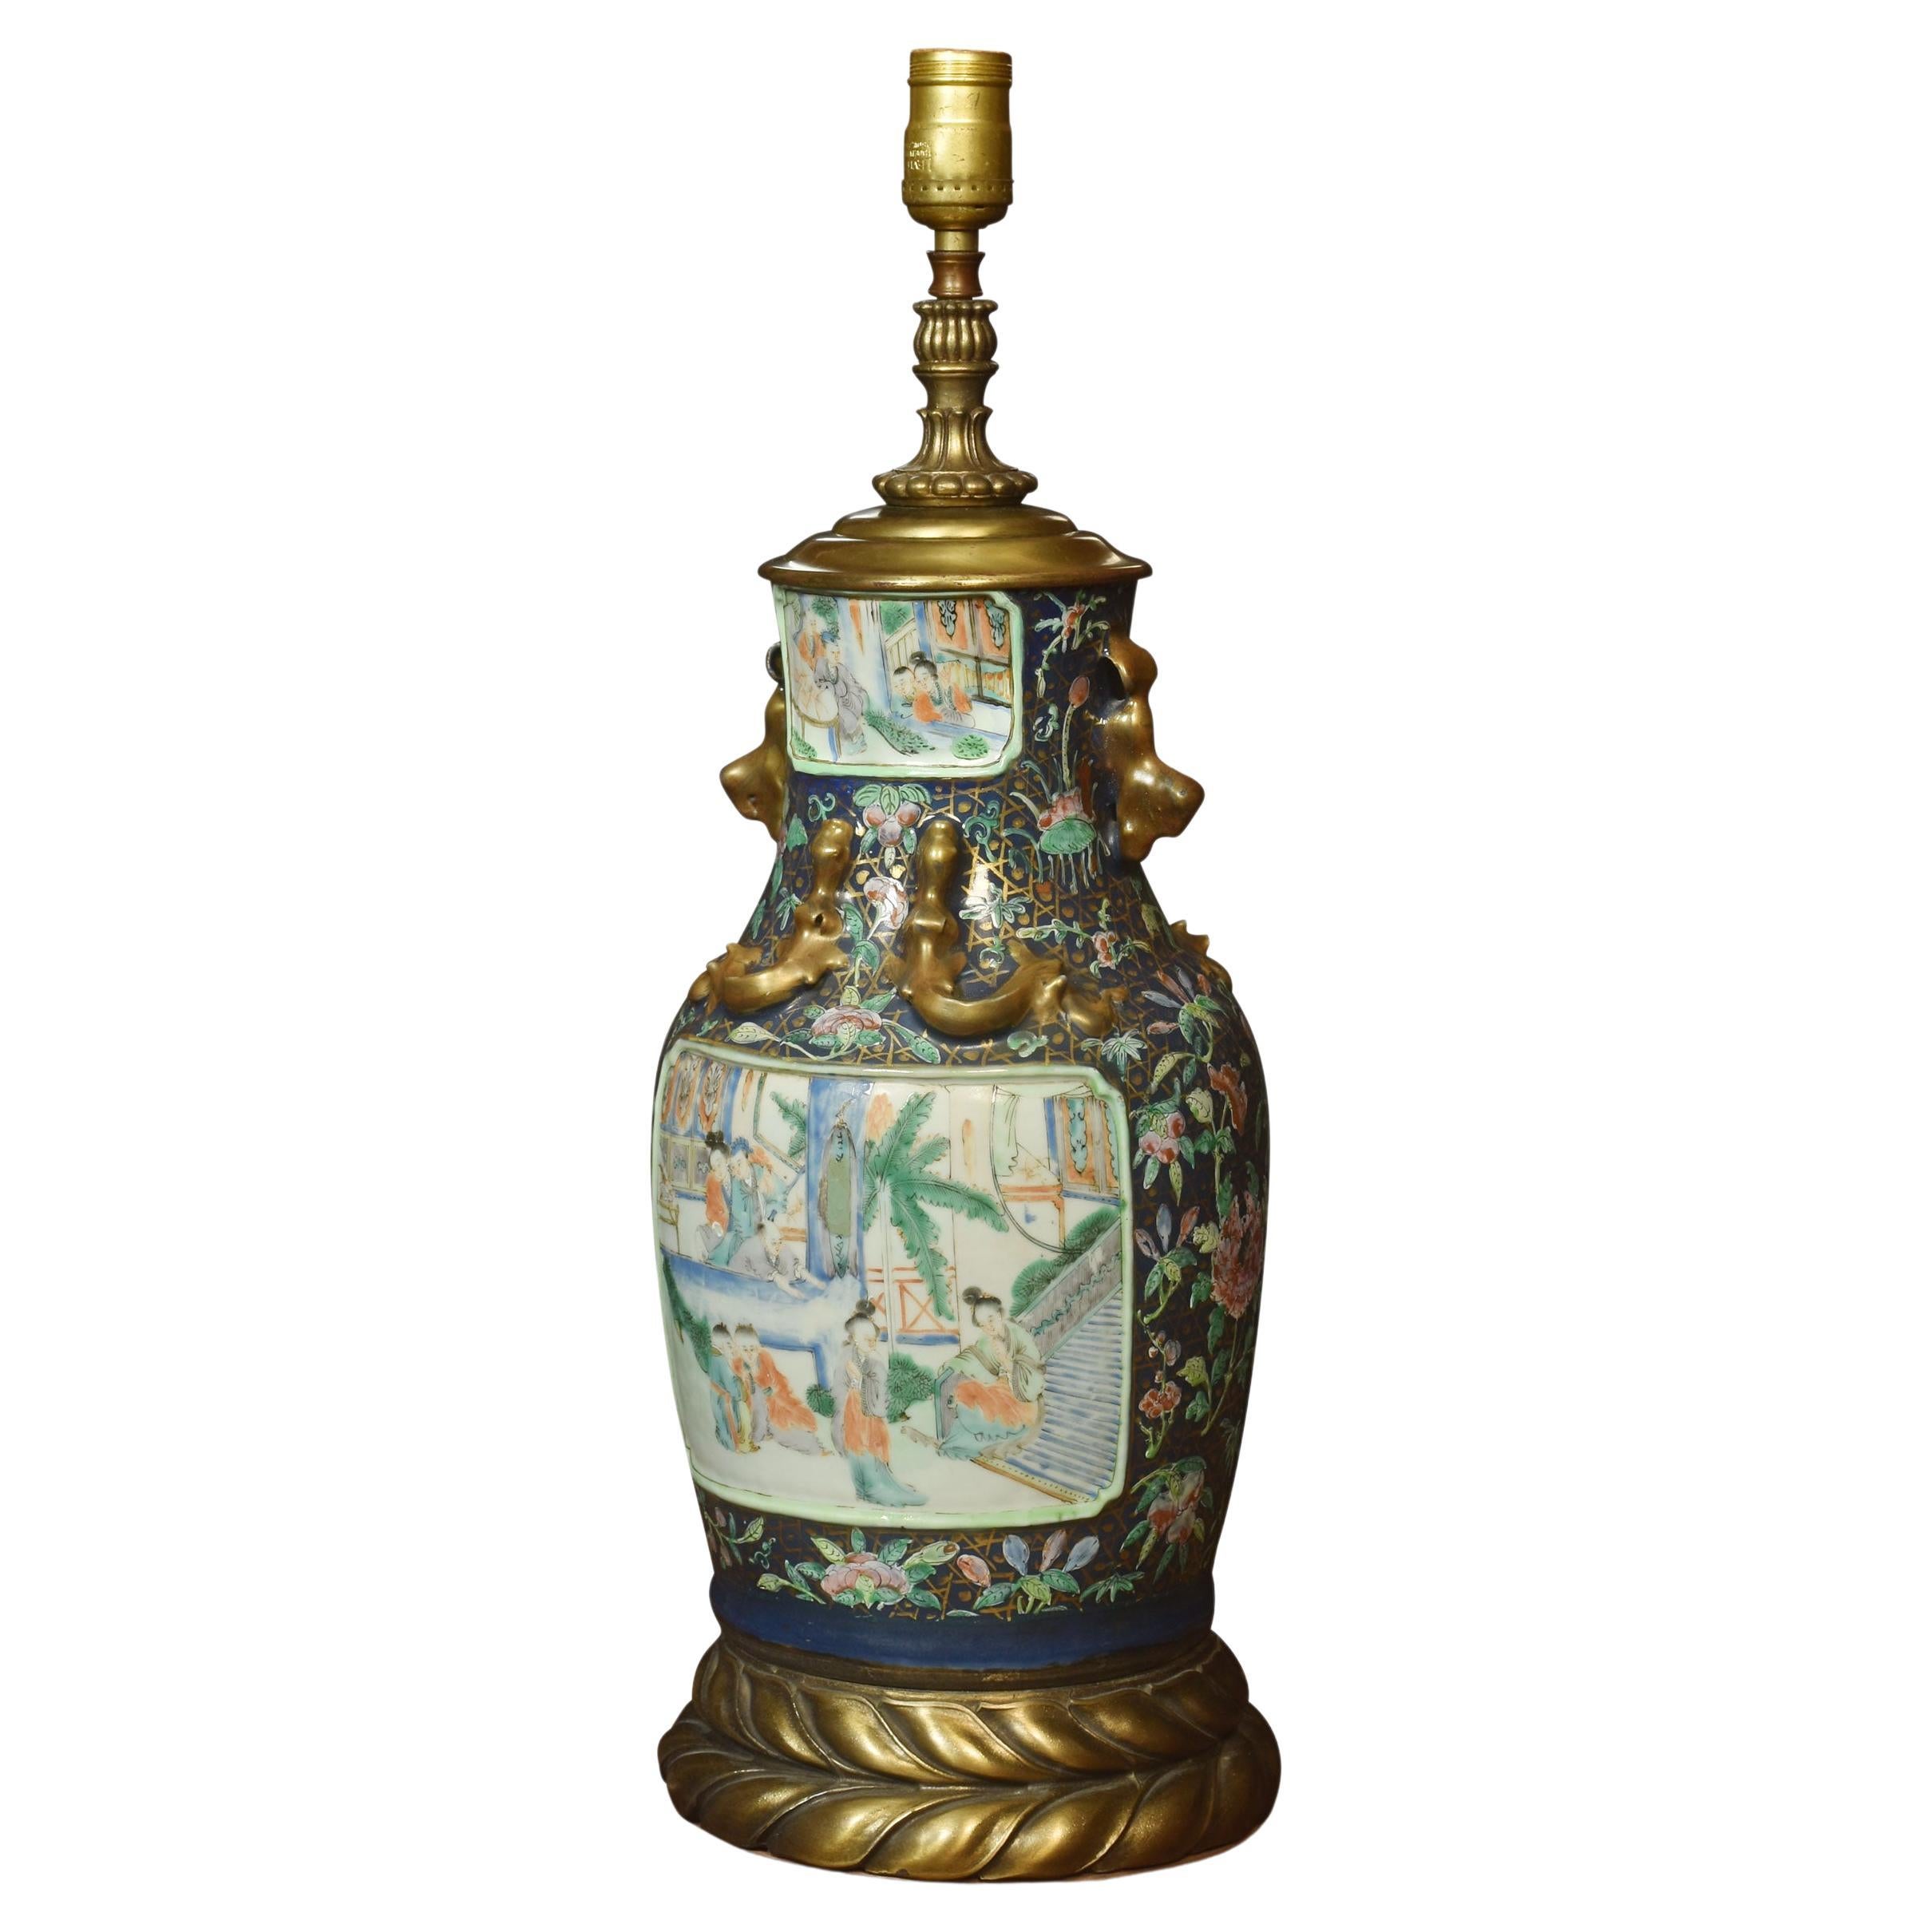 Chinease-Vasenlampe aus dem 19. Jahrhundert im Angebot